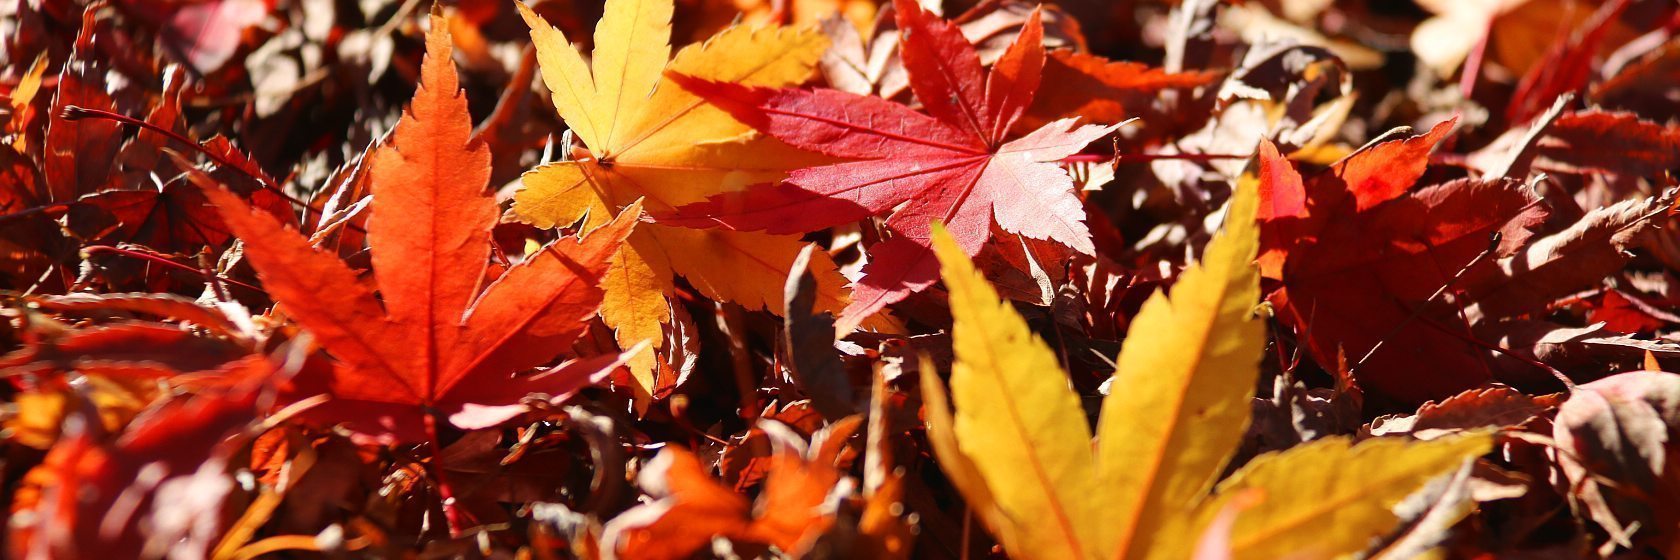 Autumn Leaves Koyo In Japan